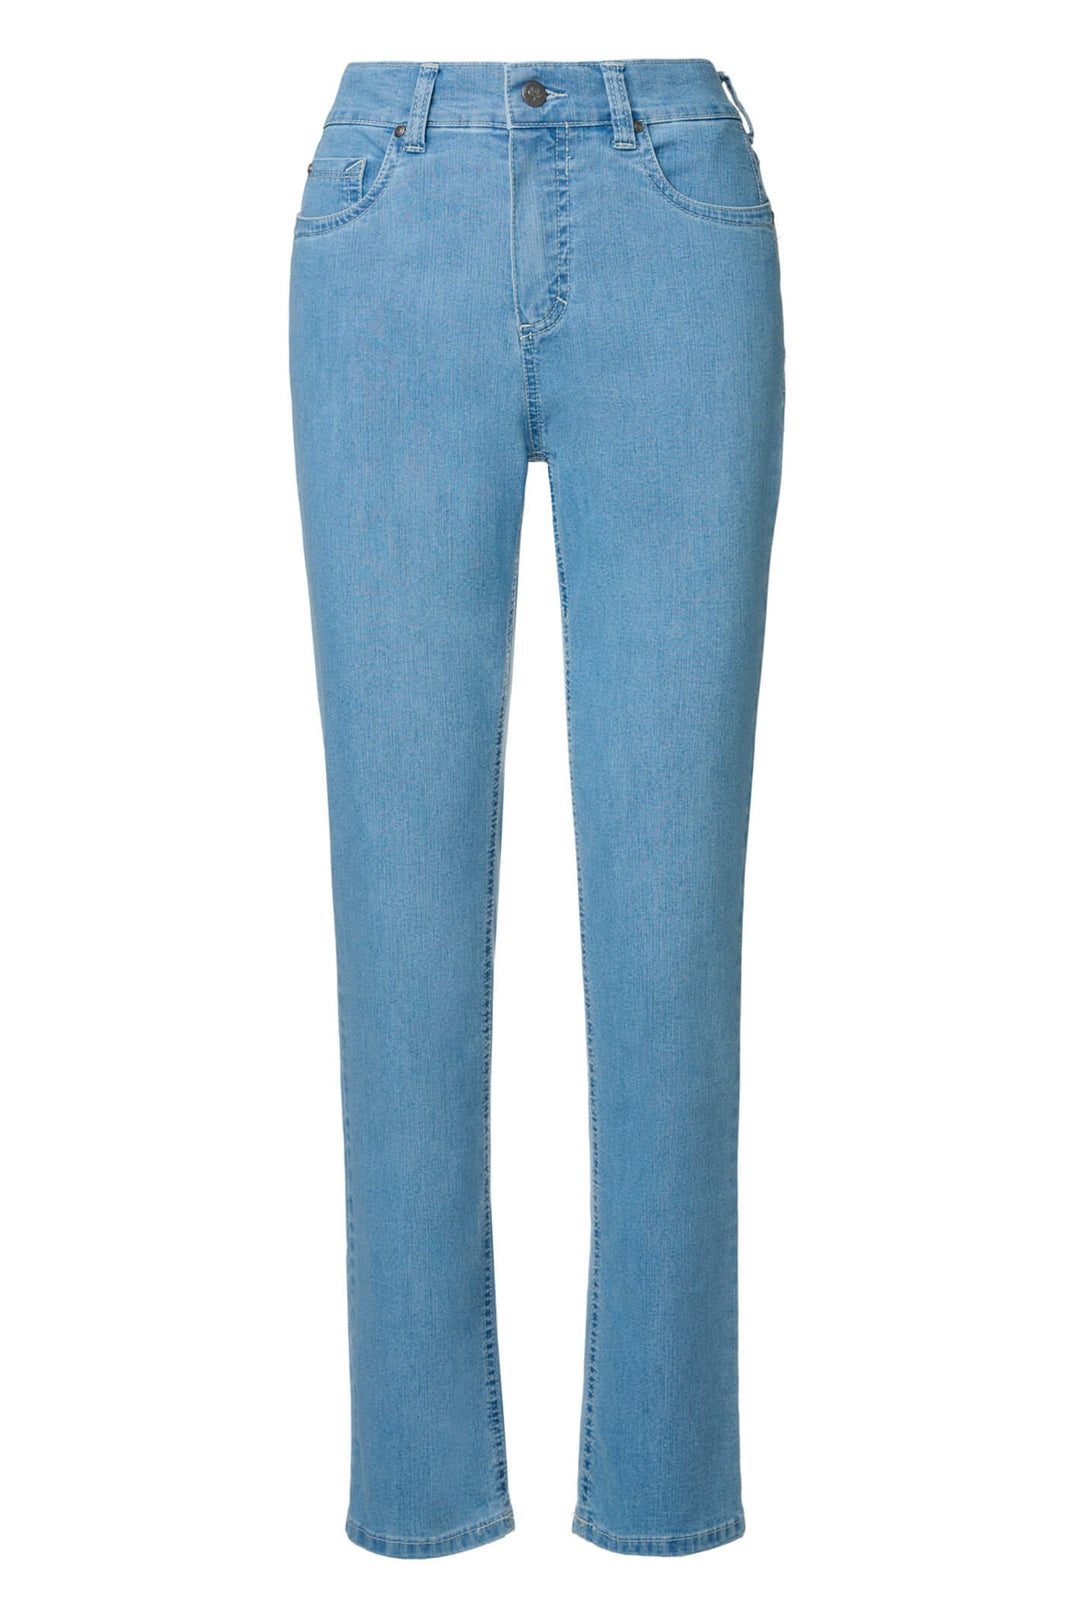 Anna Montana Dora 4014 Summerstone Blue 47 Comfort Fit Jeans - Shirley Allum Boutique